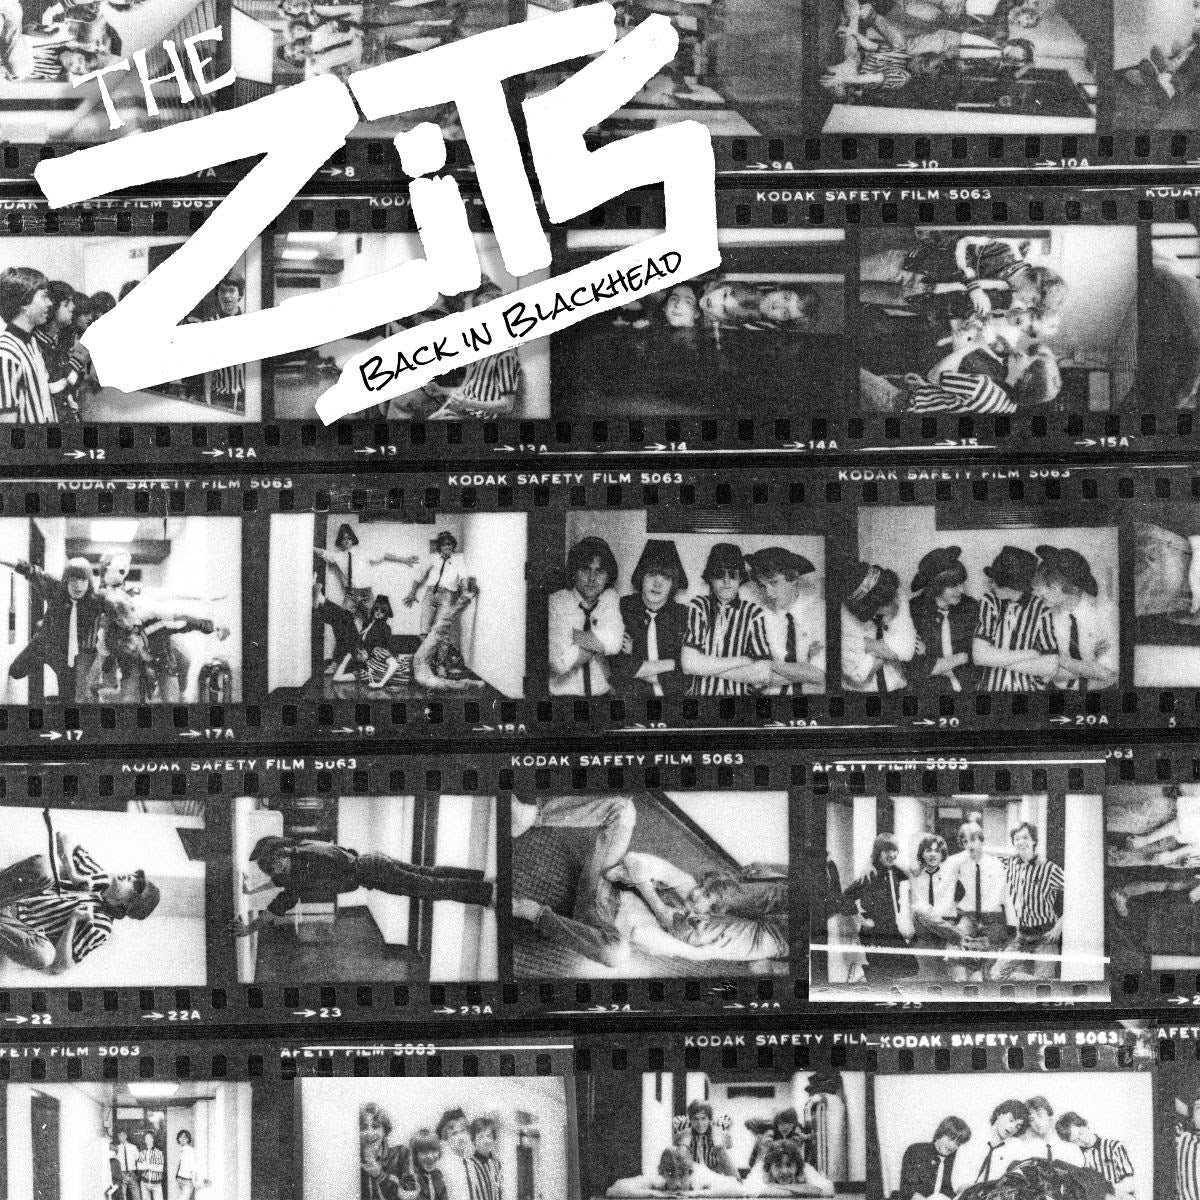 ZITS, THE - BACK IN BLACKHEAD Vinyl LP